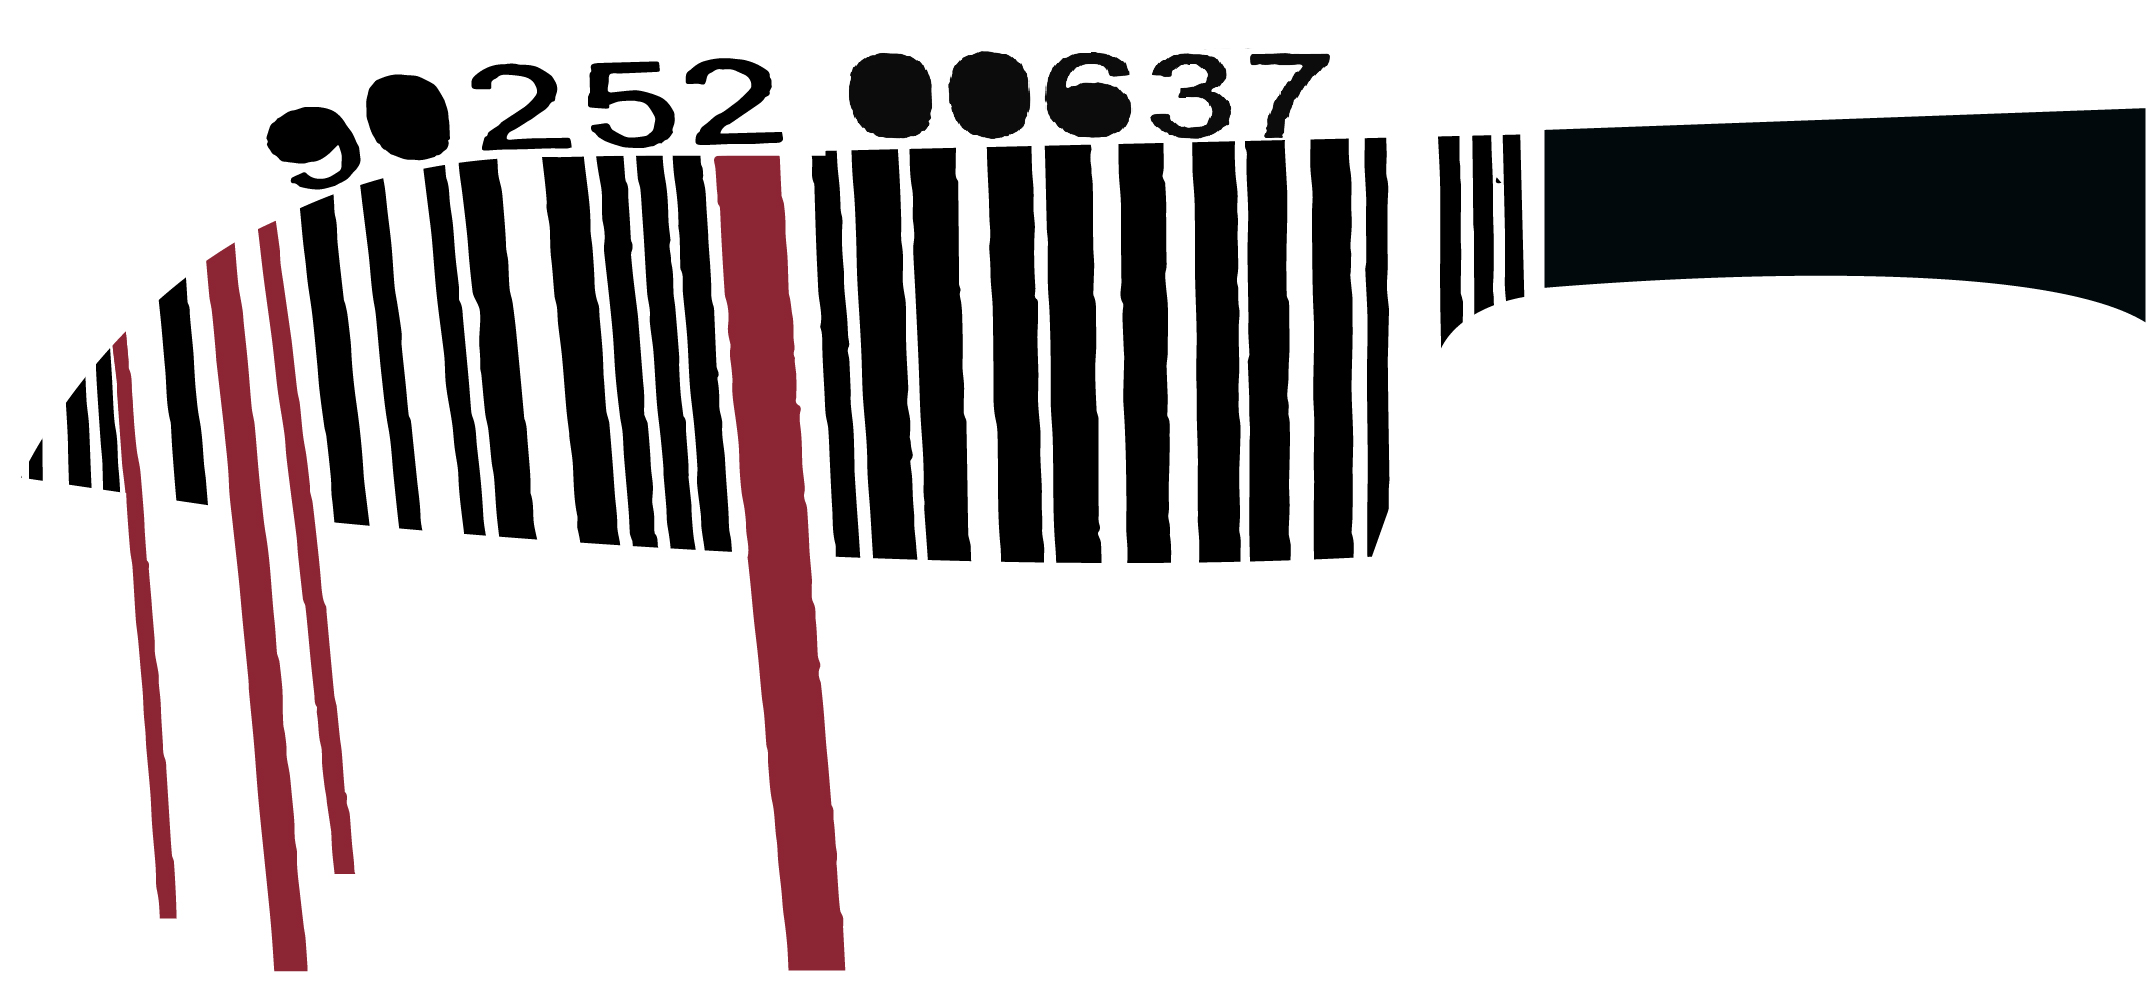 knife barcode